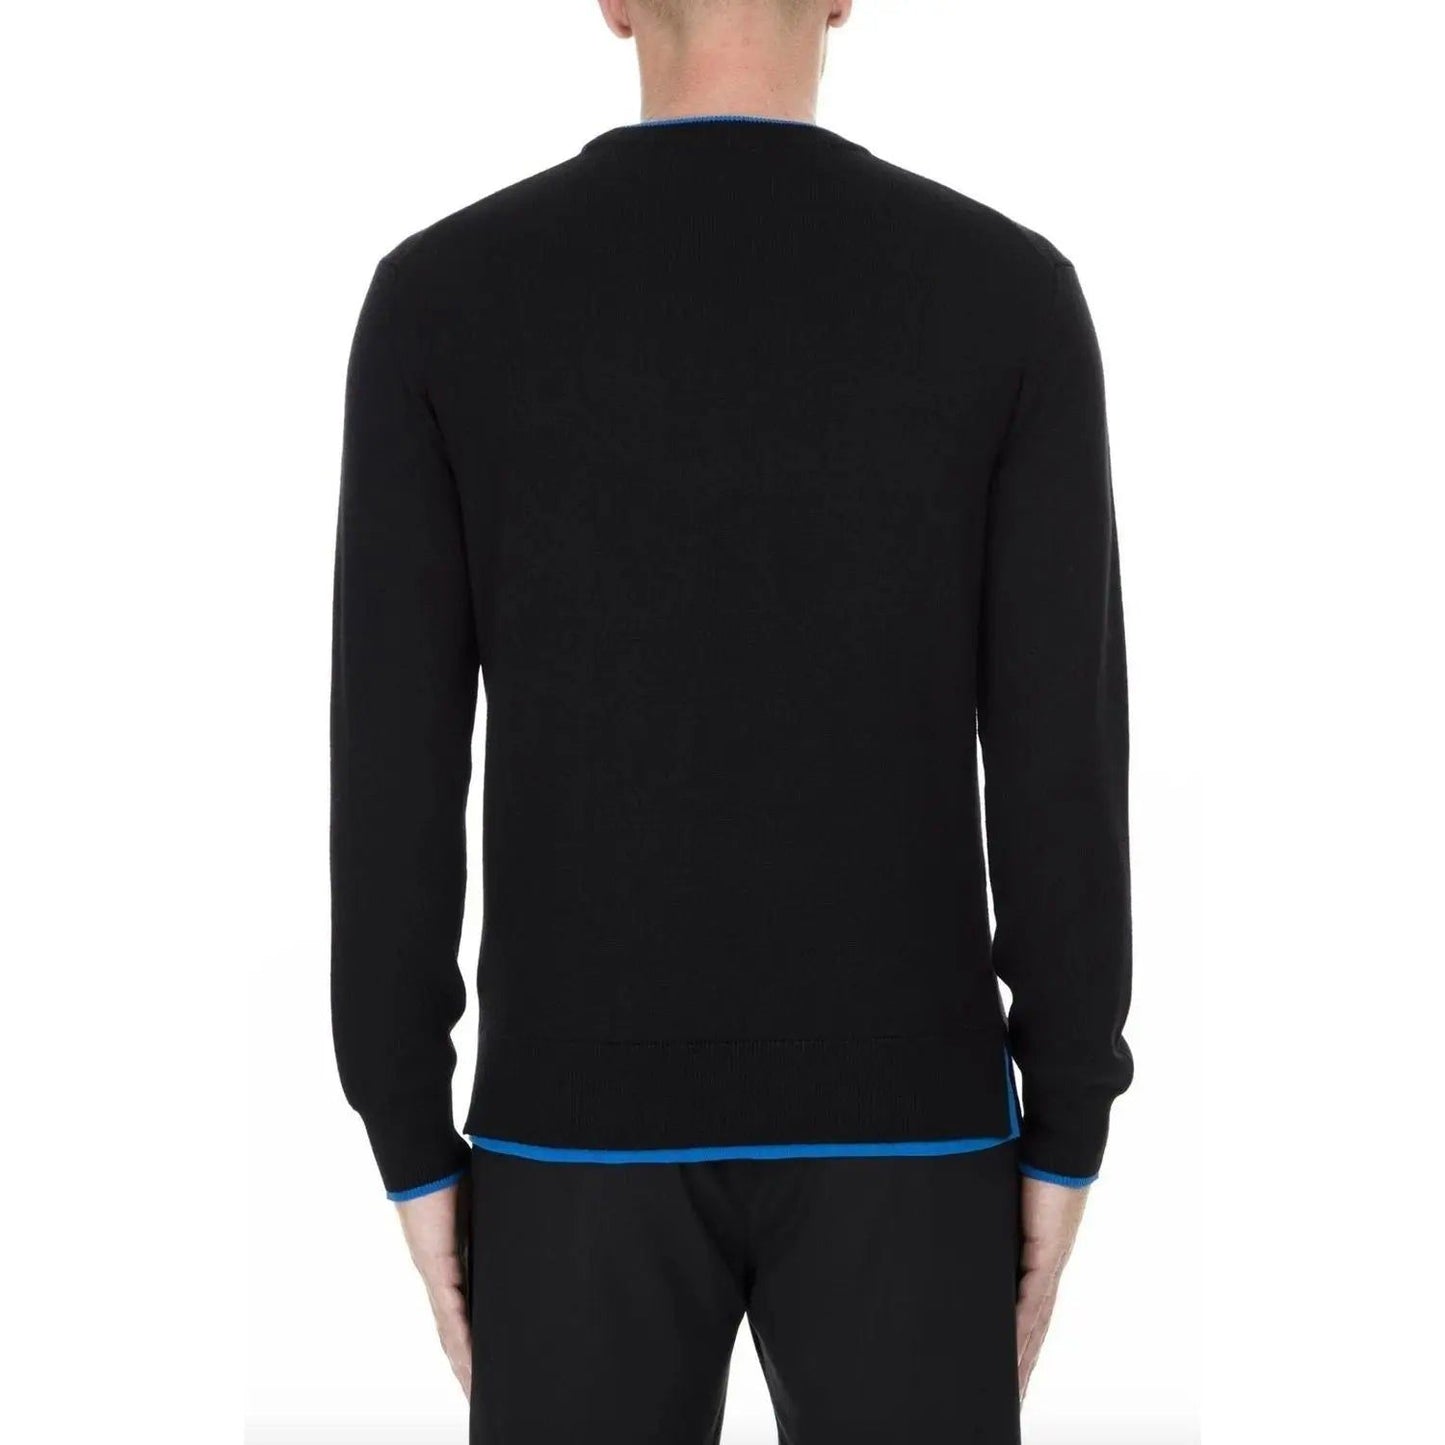 Kenzo Sleek Black Roundneck Sweater with Blue Accents sleek-black-roundneck-sweater-with-blue-accents Kenzo-_-Sleek-Black-Roundneck-Sweater-with-Blue-Accents-_-McRichard-Designer-Brands-113101189.jpg